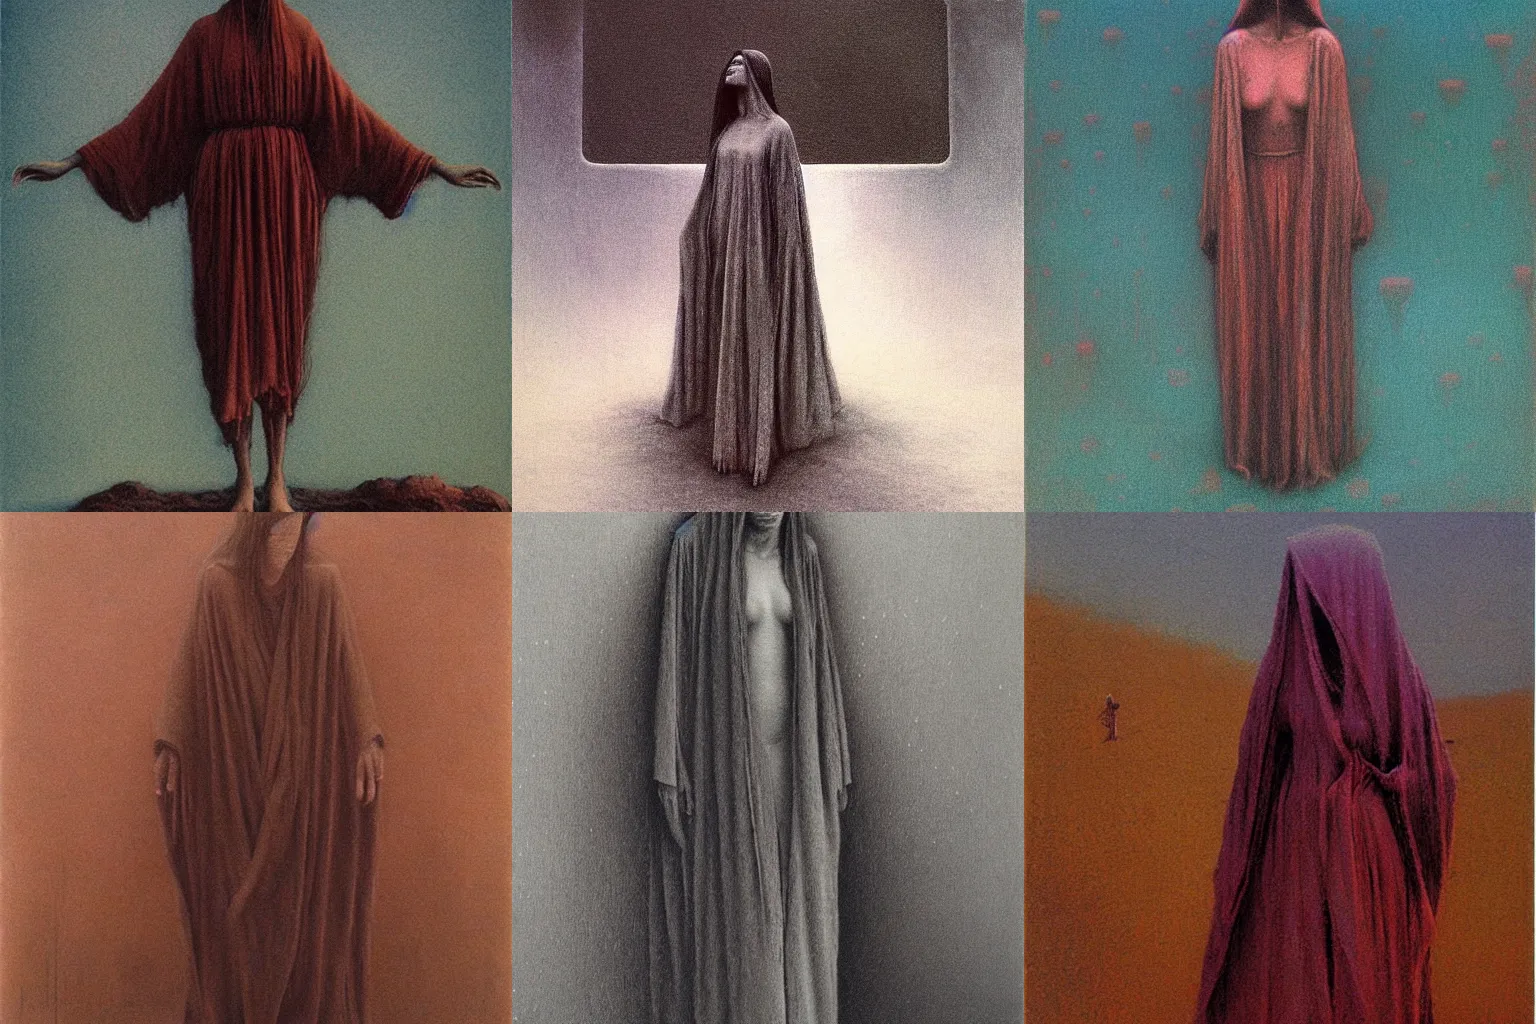 Prompt: full body portrait of female in robe by Beksinski